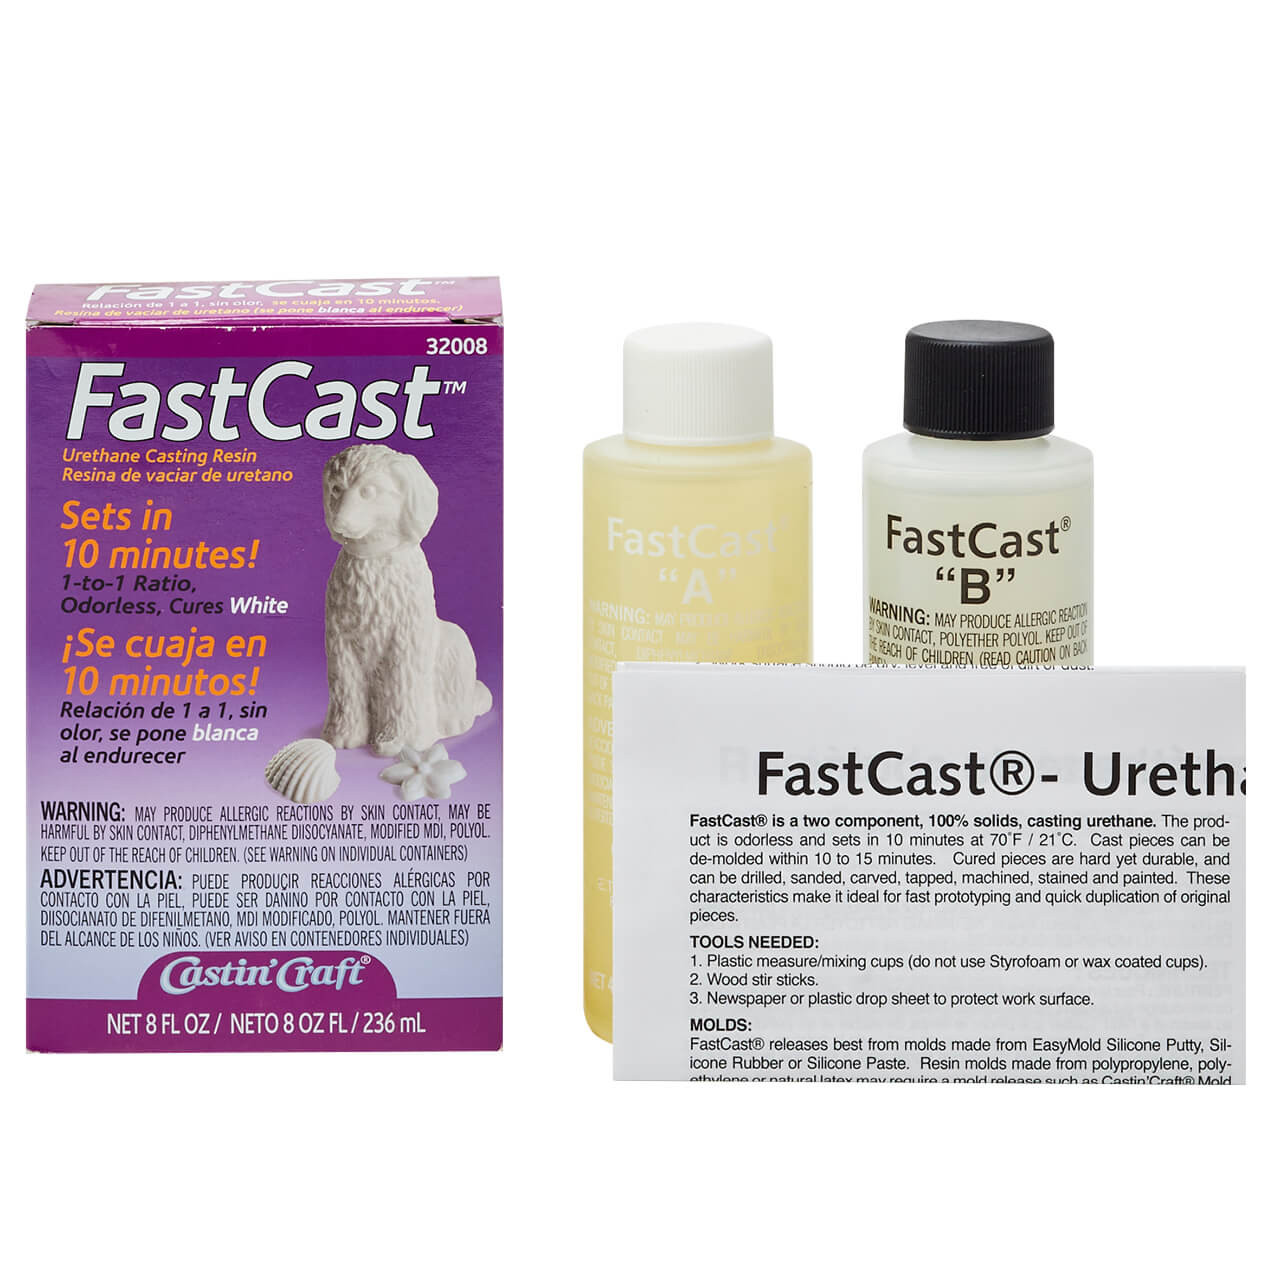 Castin' Craft FastCast™